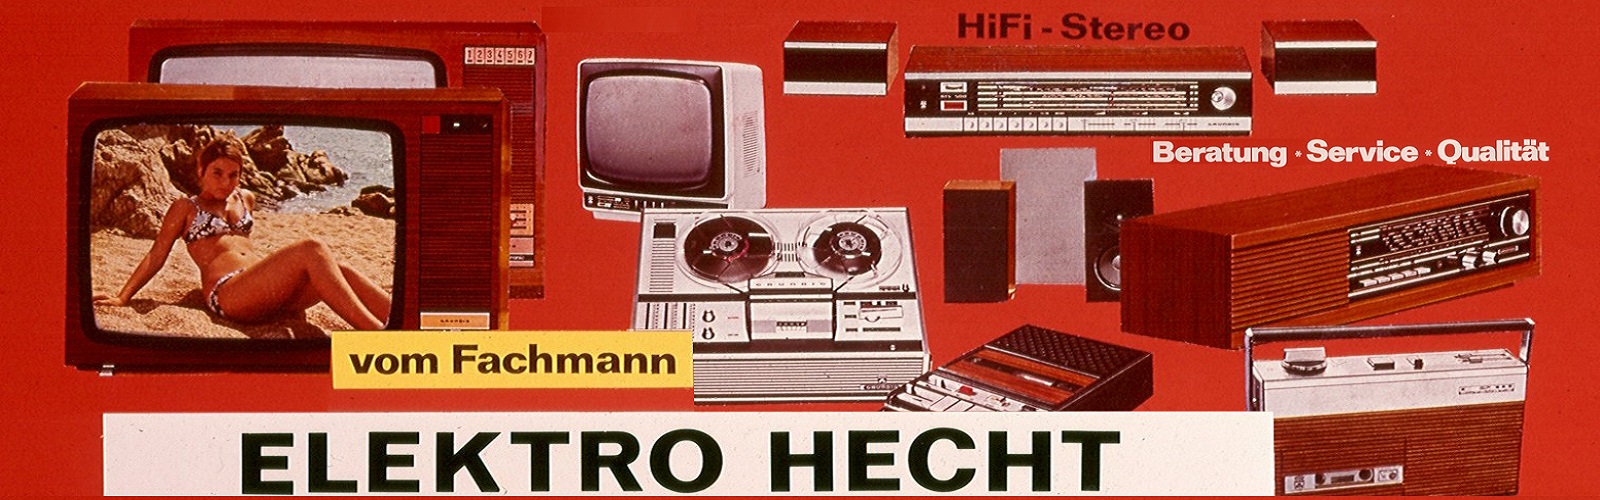 Elektrohech Kinowerbung 1988